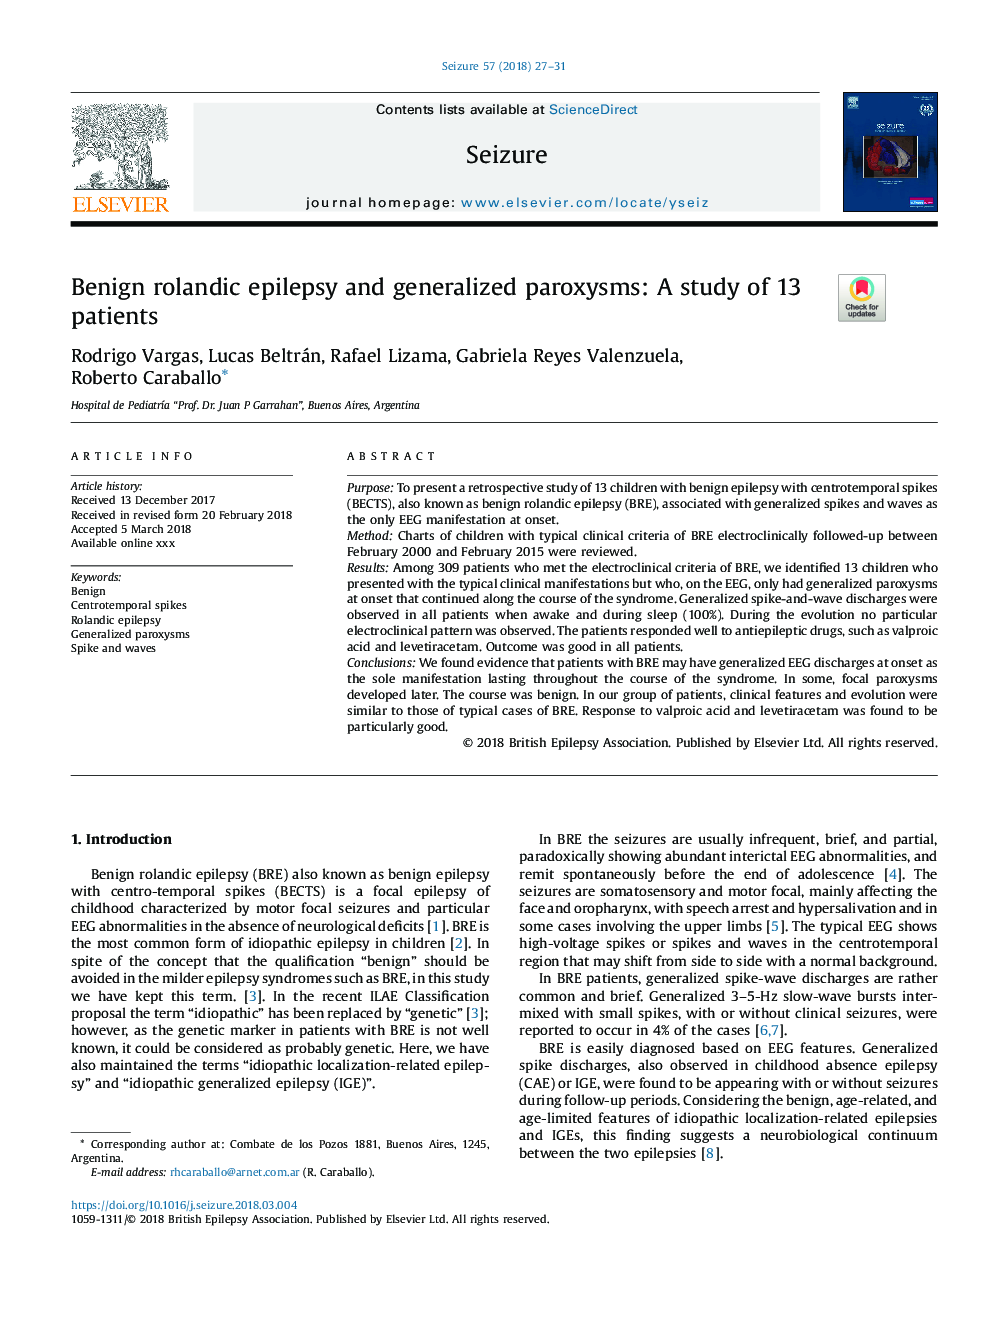 Benign rolandic epilepsy and generalized paroxysms: A study of 13 patients